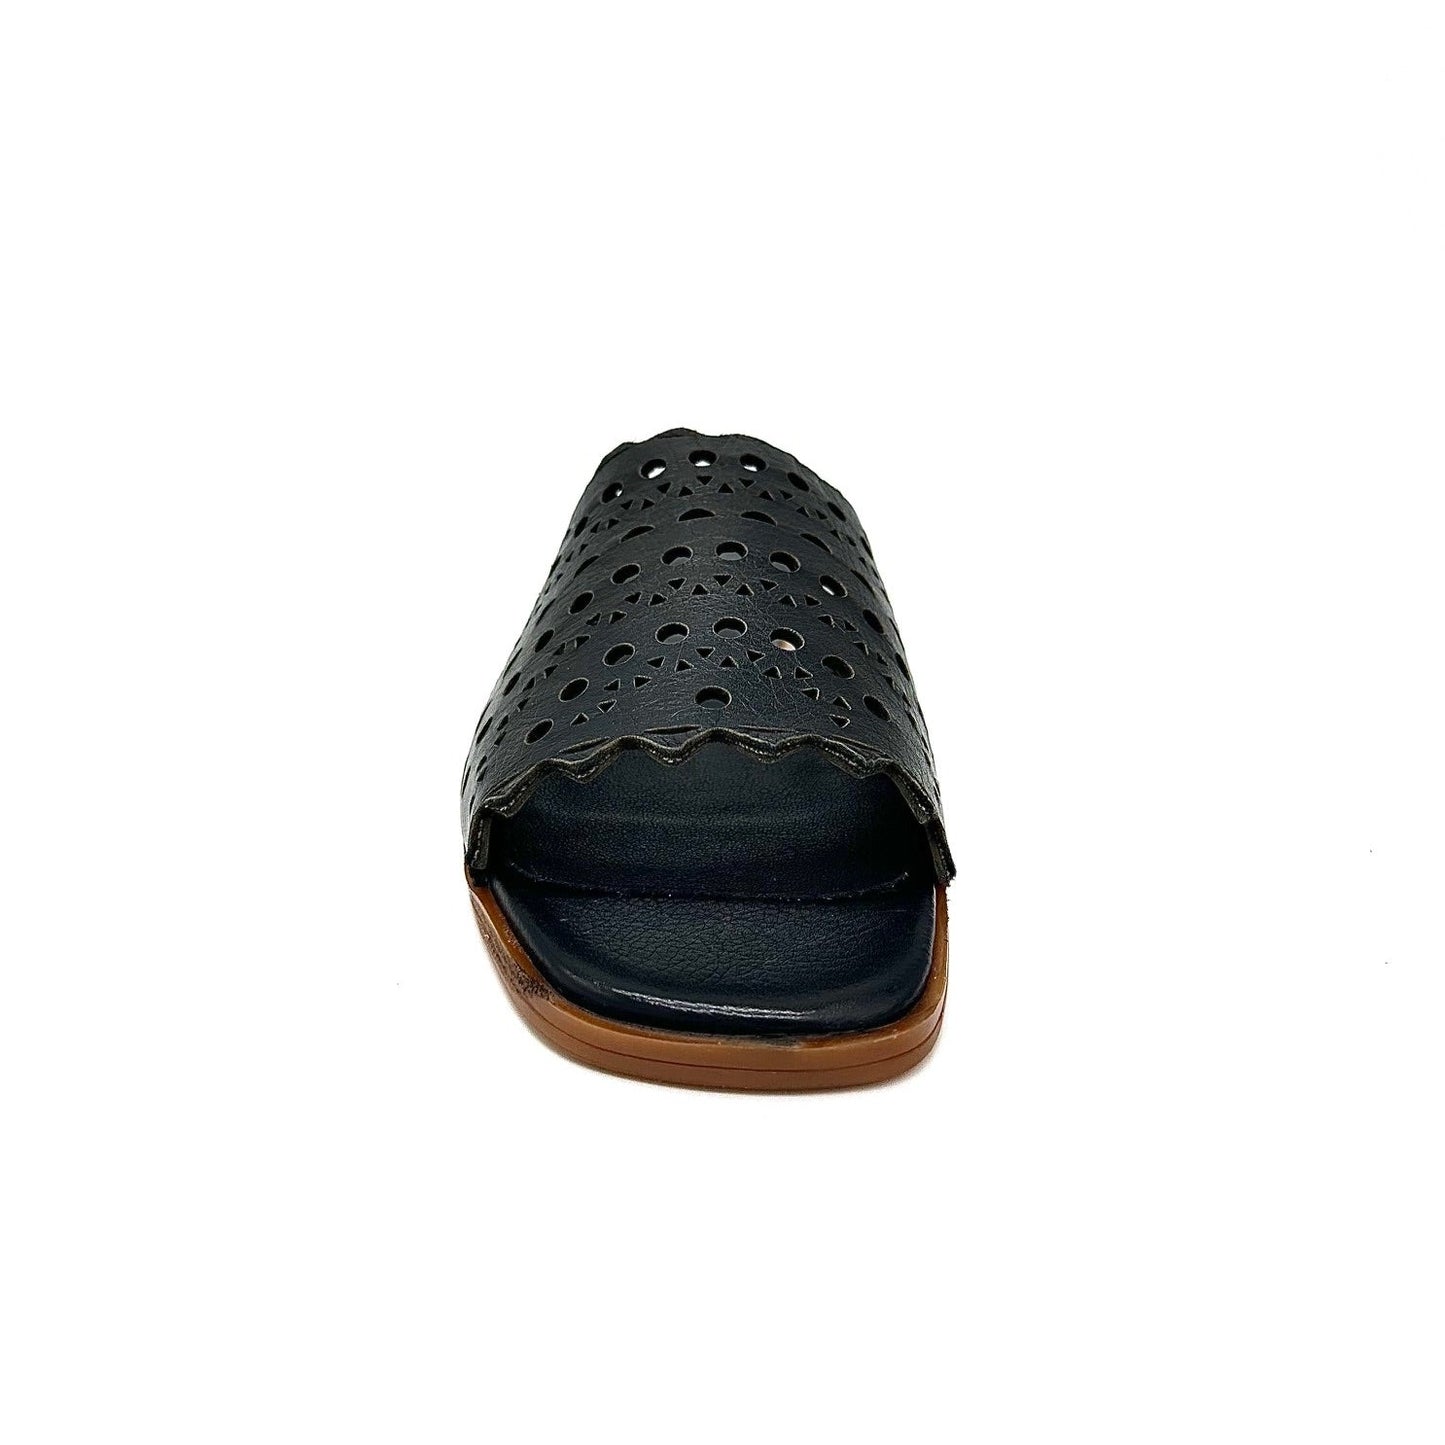 MAGO 138-21411 Flat Open Sandal